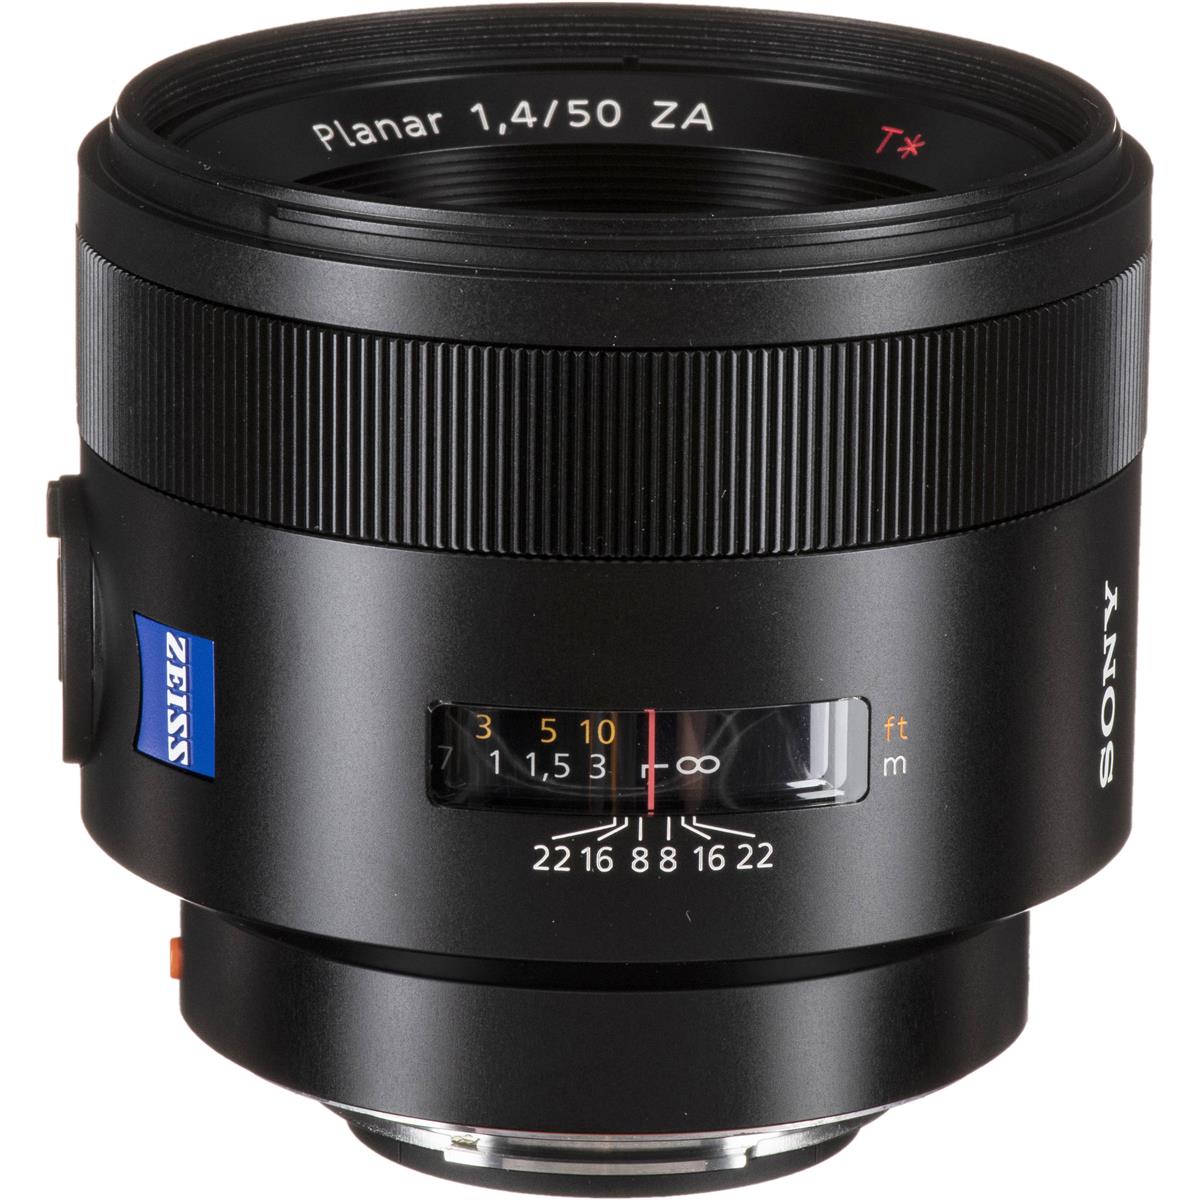 Image of Sony Planar T* 50mm F1.4 ZA SSM A-Mount Lens